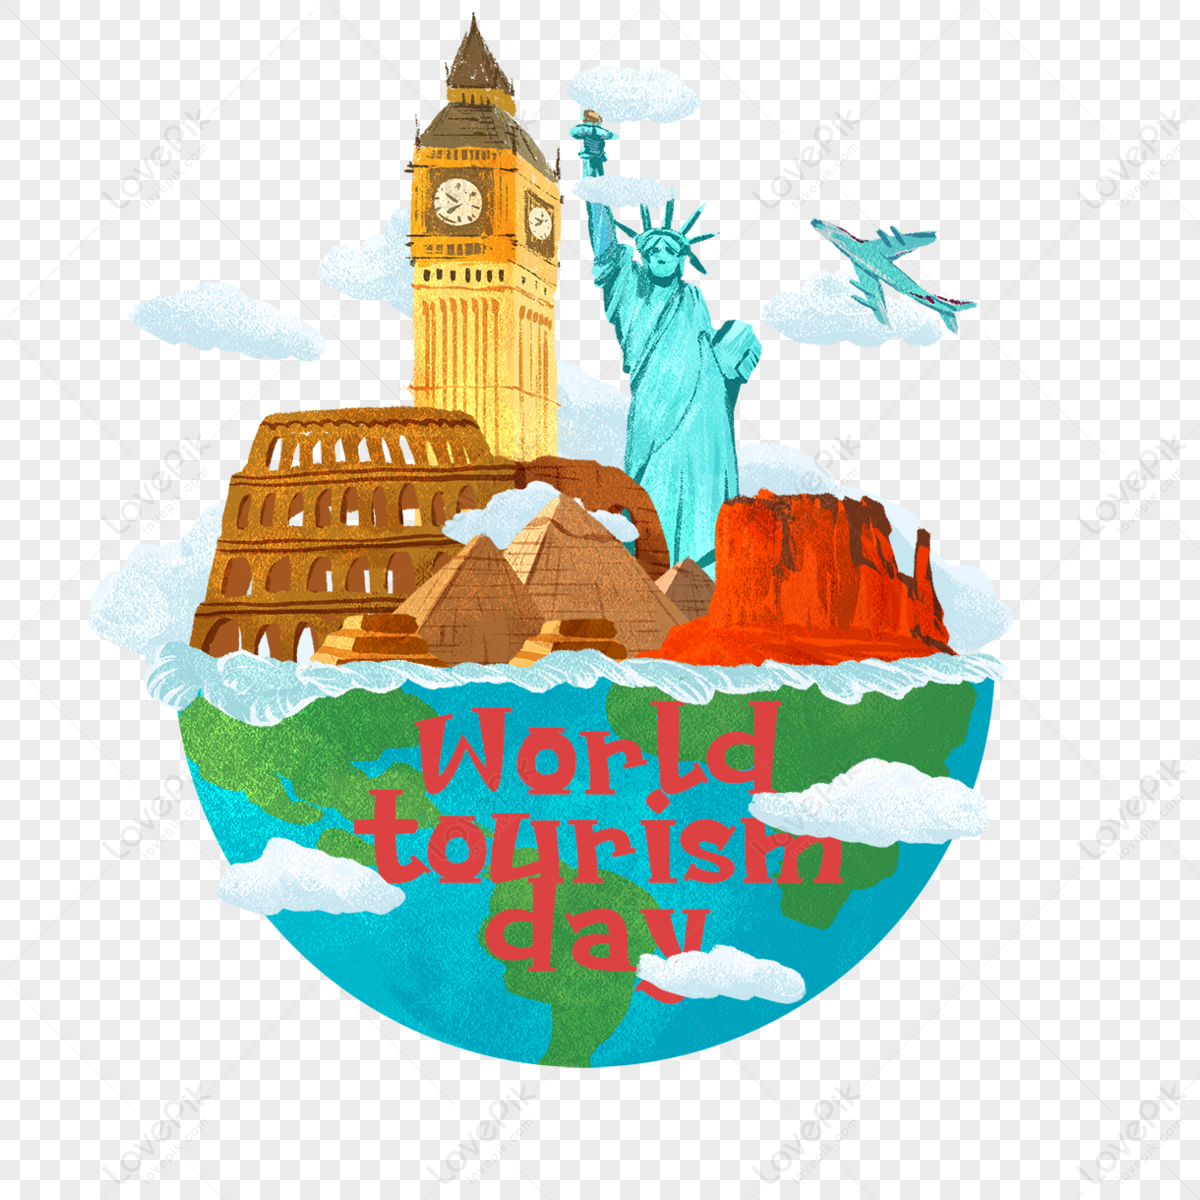 world tourism day attractive tourist destination,symbol,journey png hd transparent image